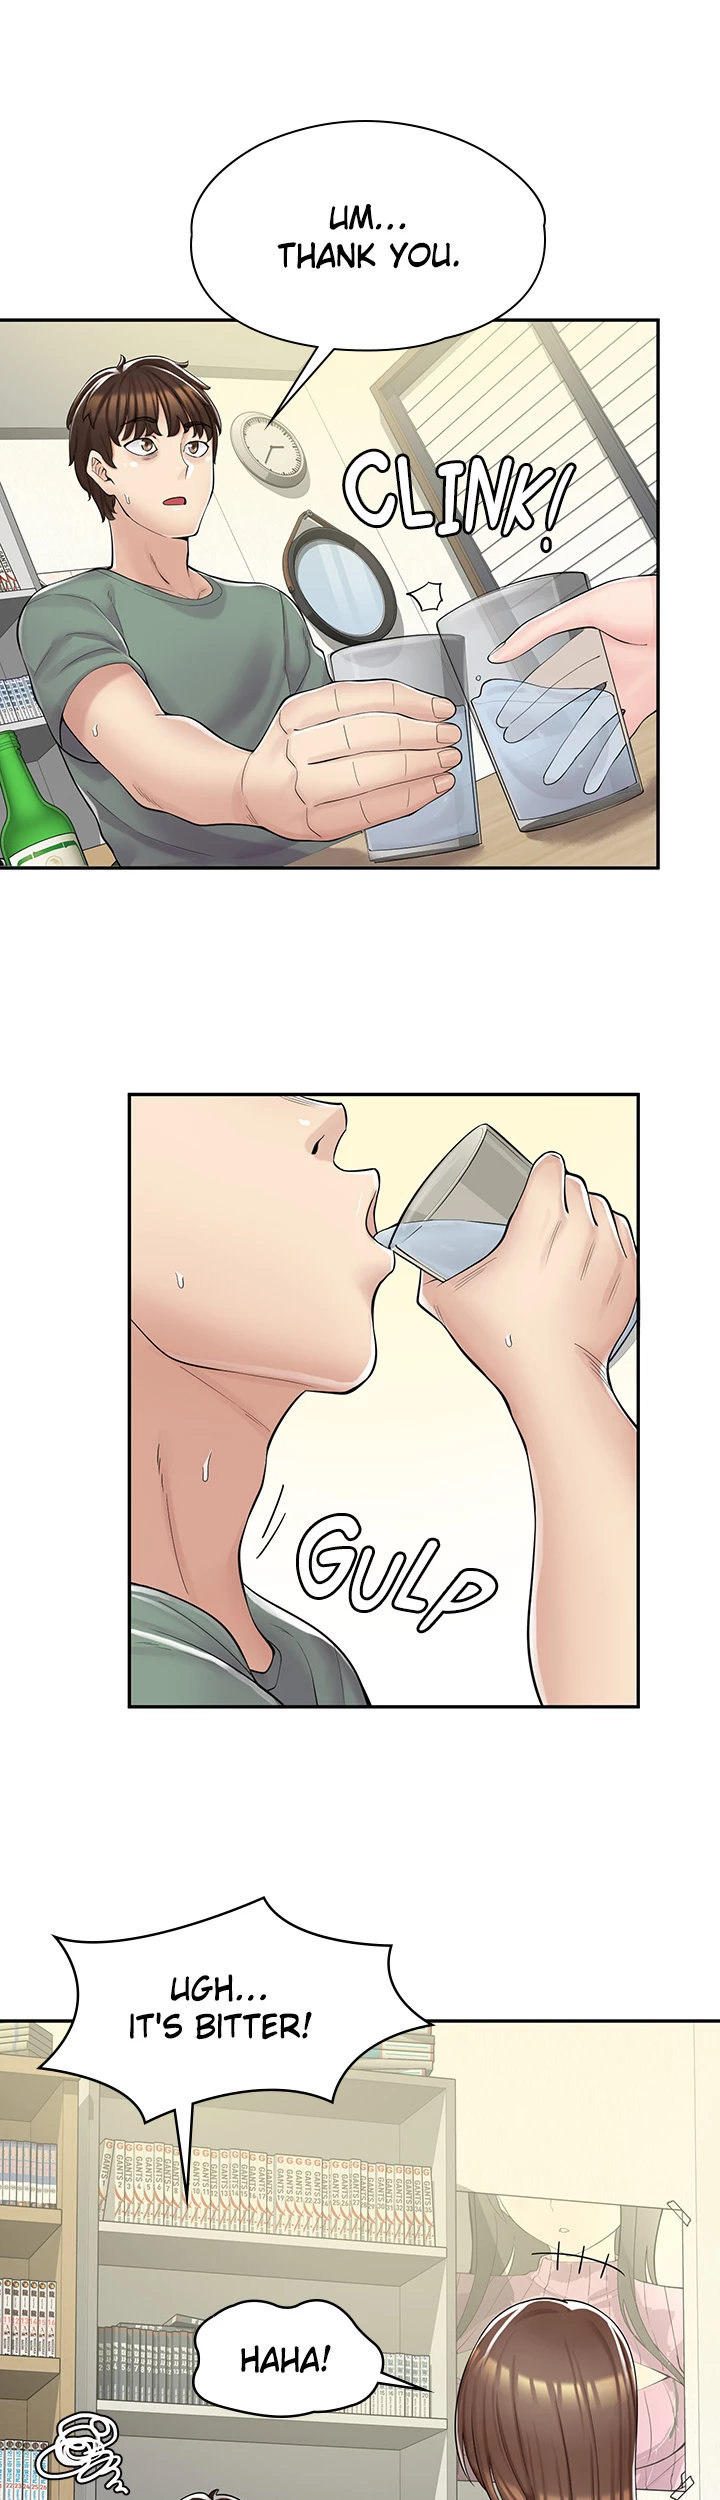 Erotic Manga Café Girls - Chapter 3 Page 9